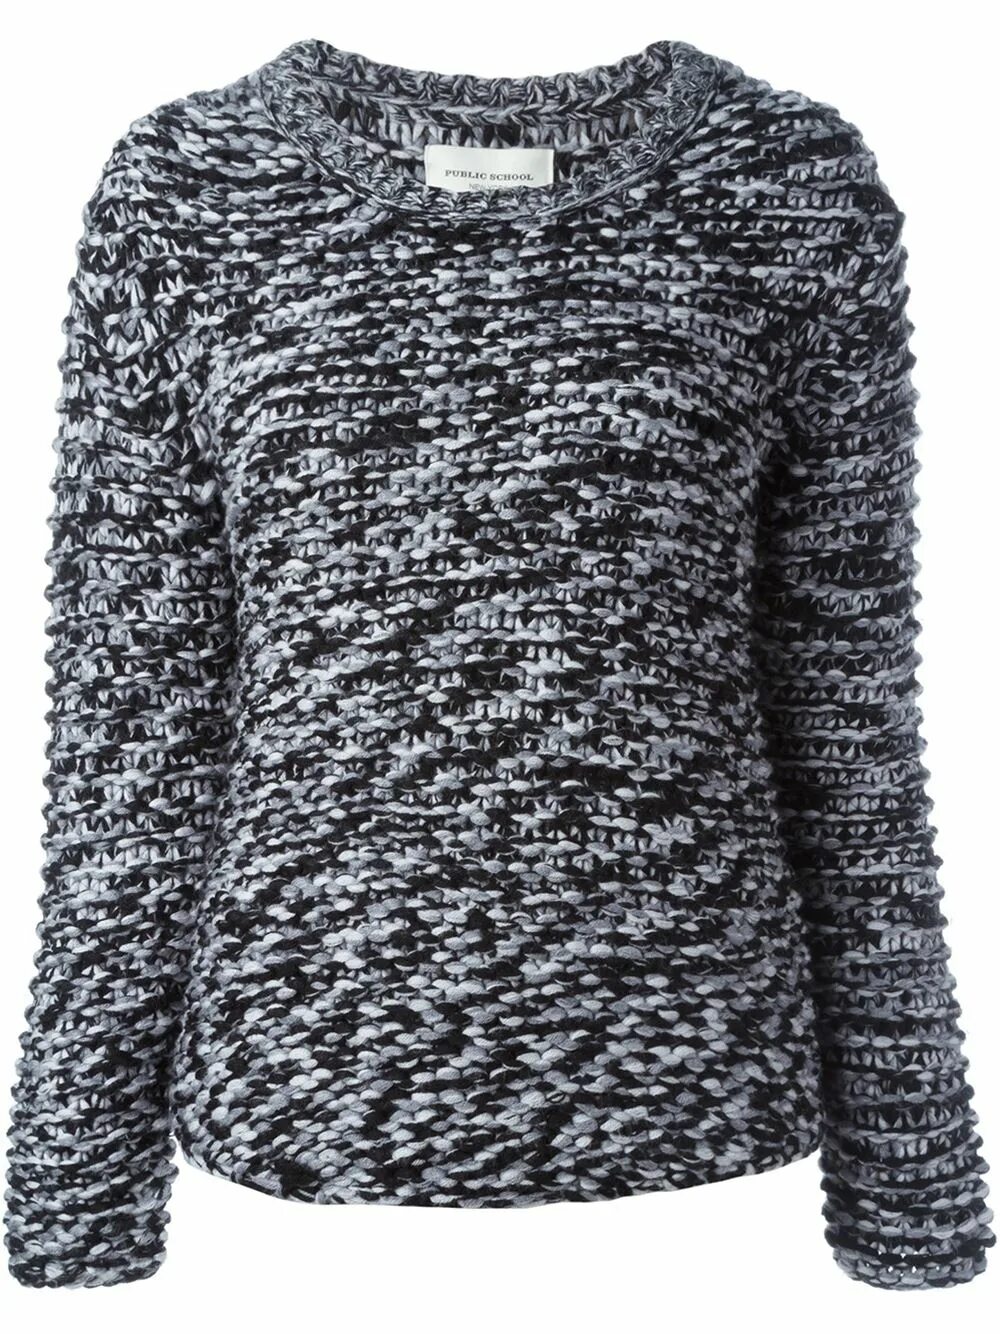 Черно белые джемпера. Меланжевый джемпер Zara Knit. Свитер женский. Меланжевый свитер. Меланжевый свитер женский.